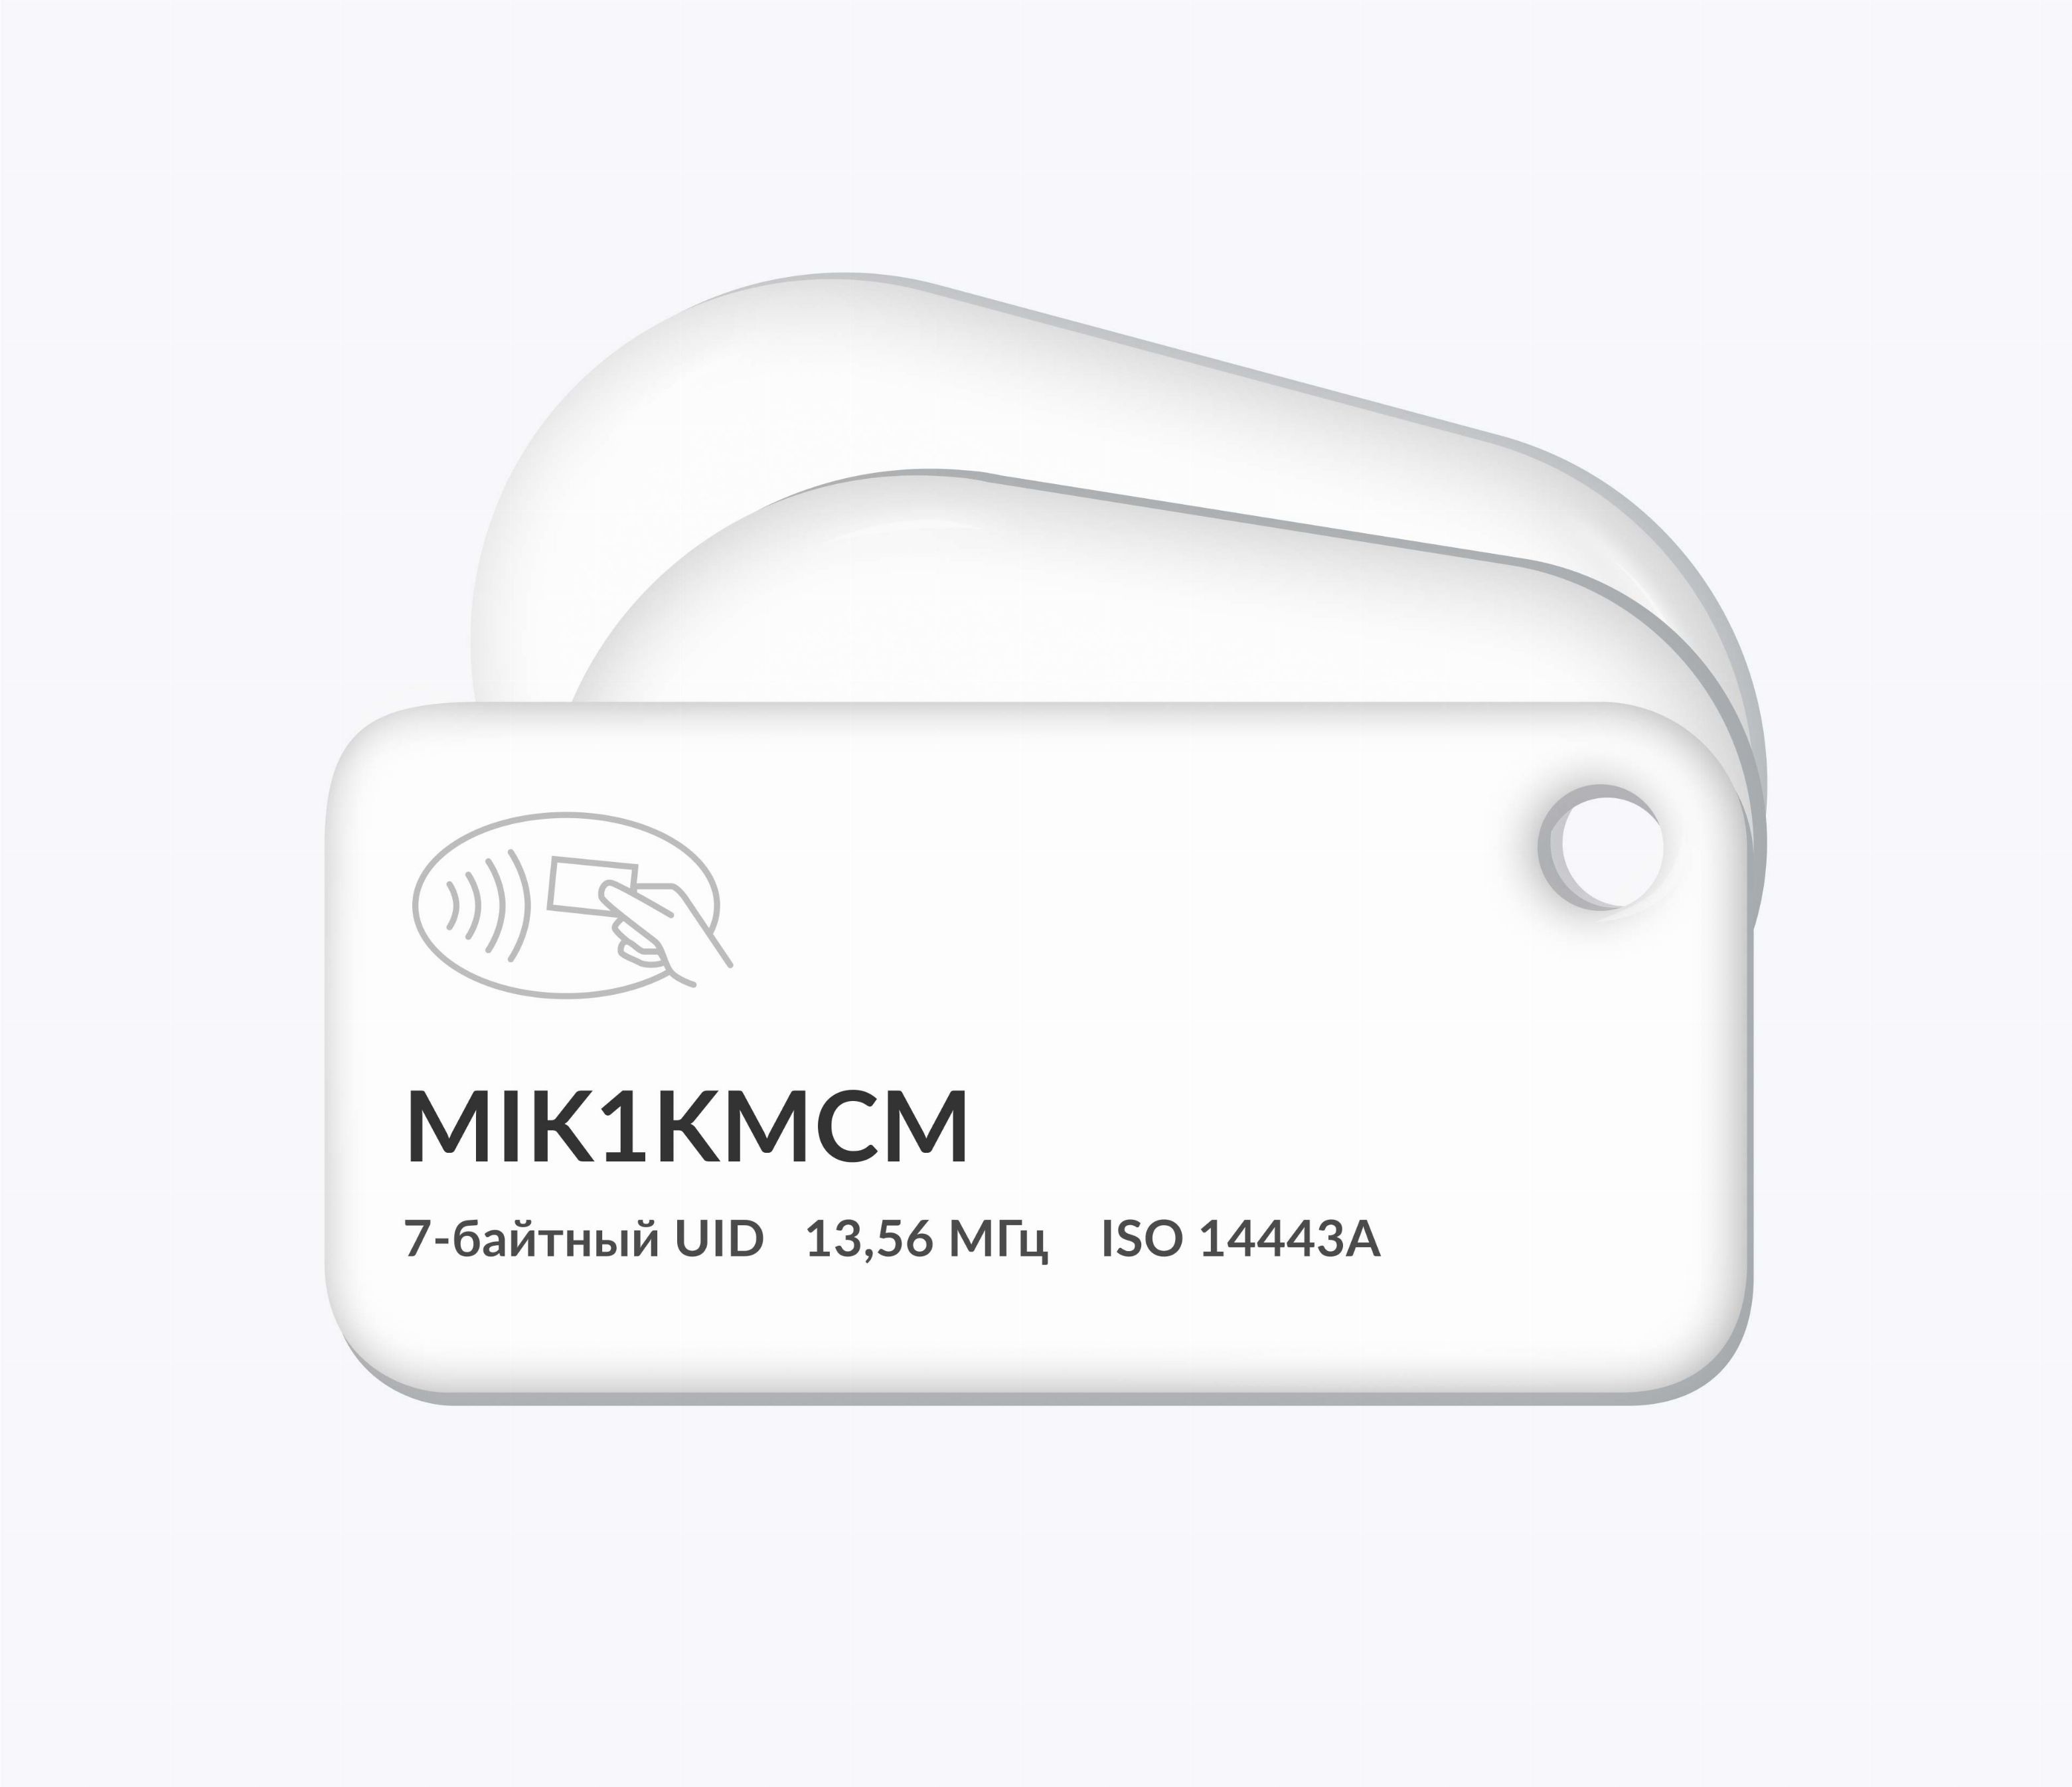 RFID-брелоки NEOKEY® с чипом MIK1KMCM 7 byte UID и вашим логотипом RFID-брелоки NEOKEY® с чипом MIK1KMCM 7 byte UID и вашим логотипом